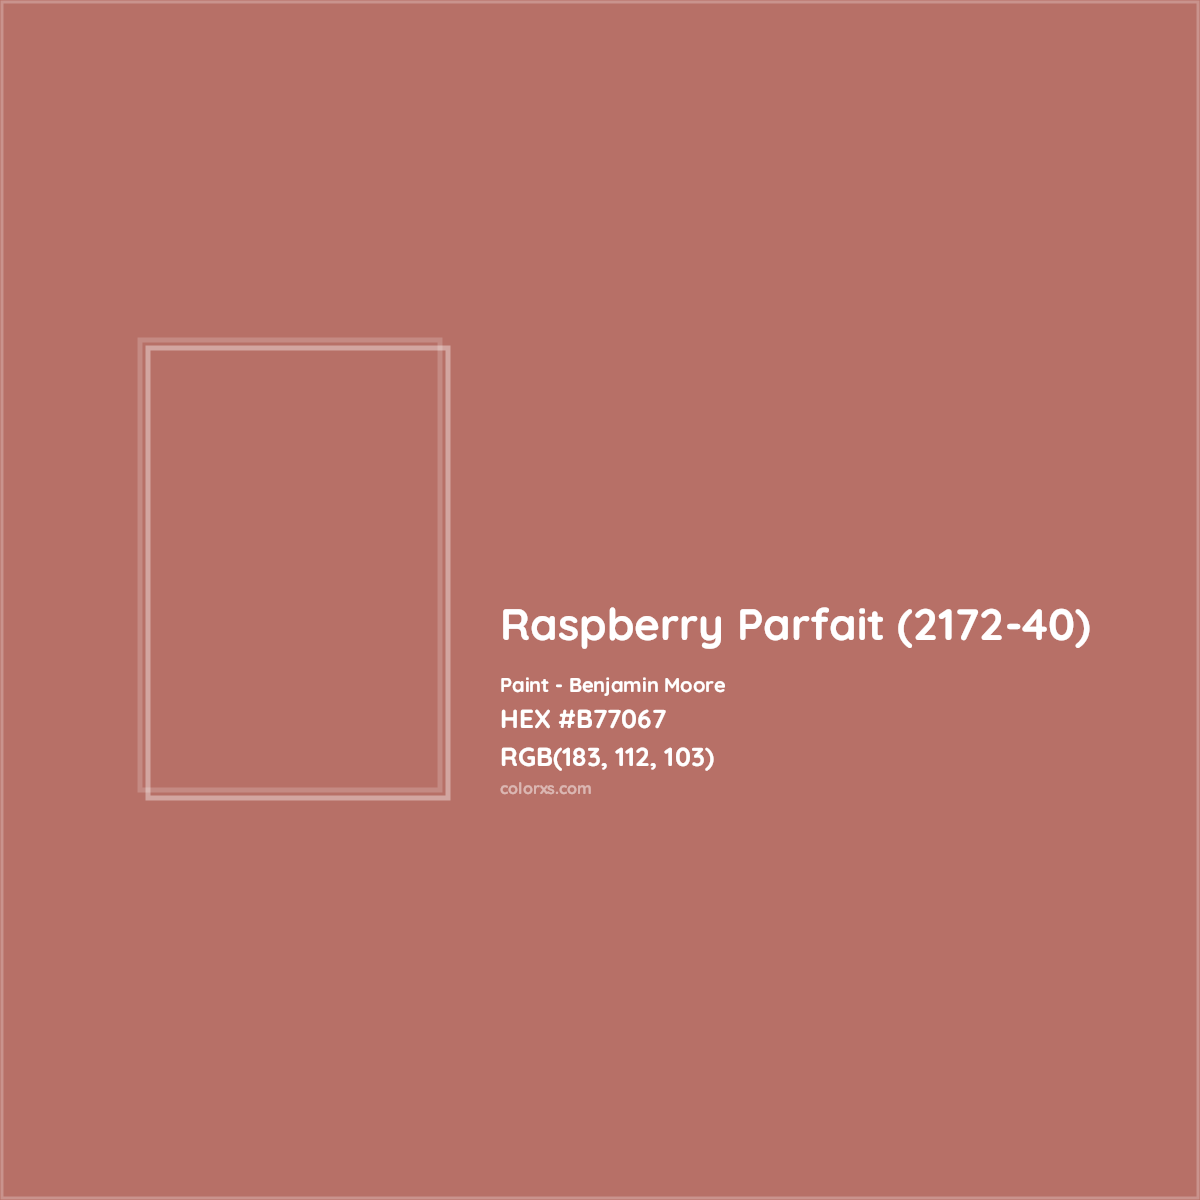 HEX #B77067 Raspberry Parfait (2172-40) Paint Benjamin Moore - Color Code